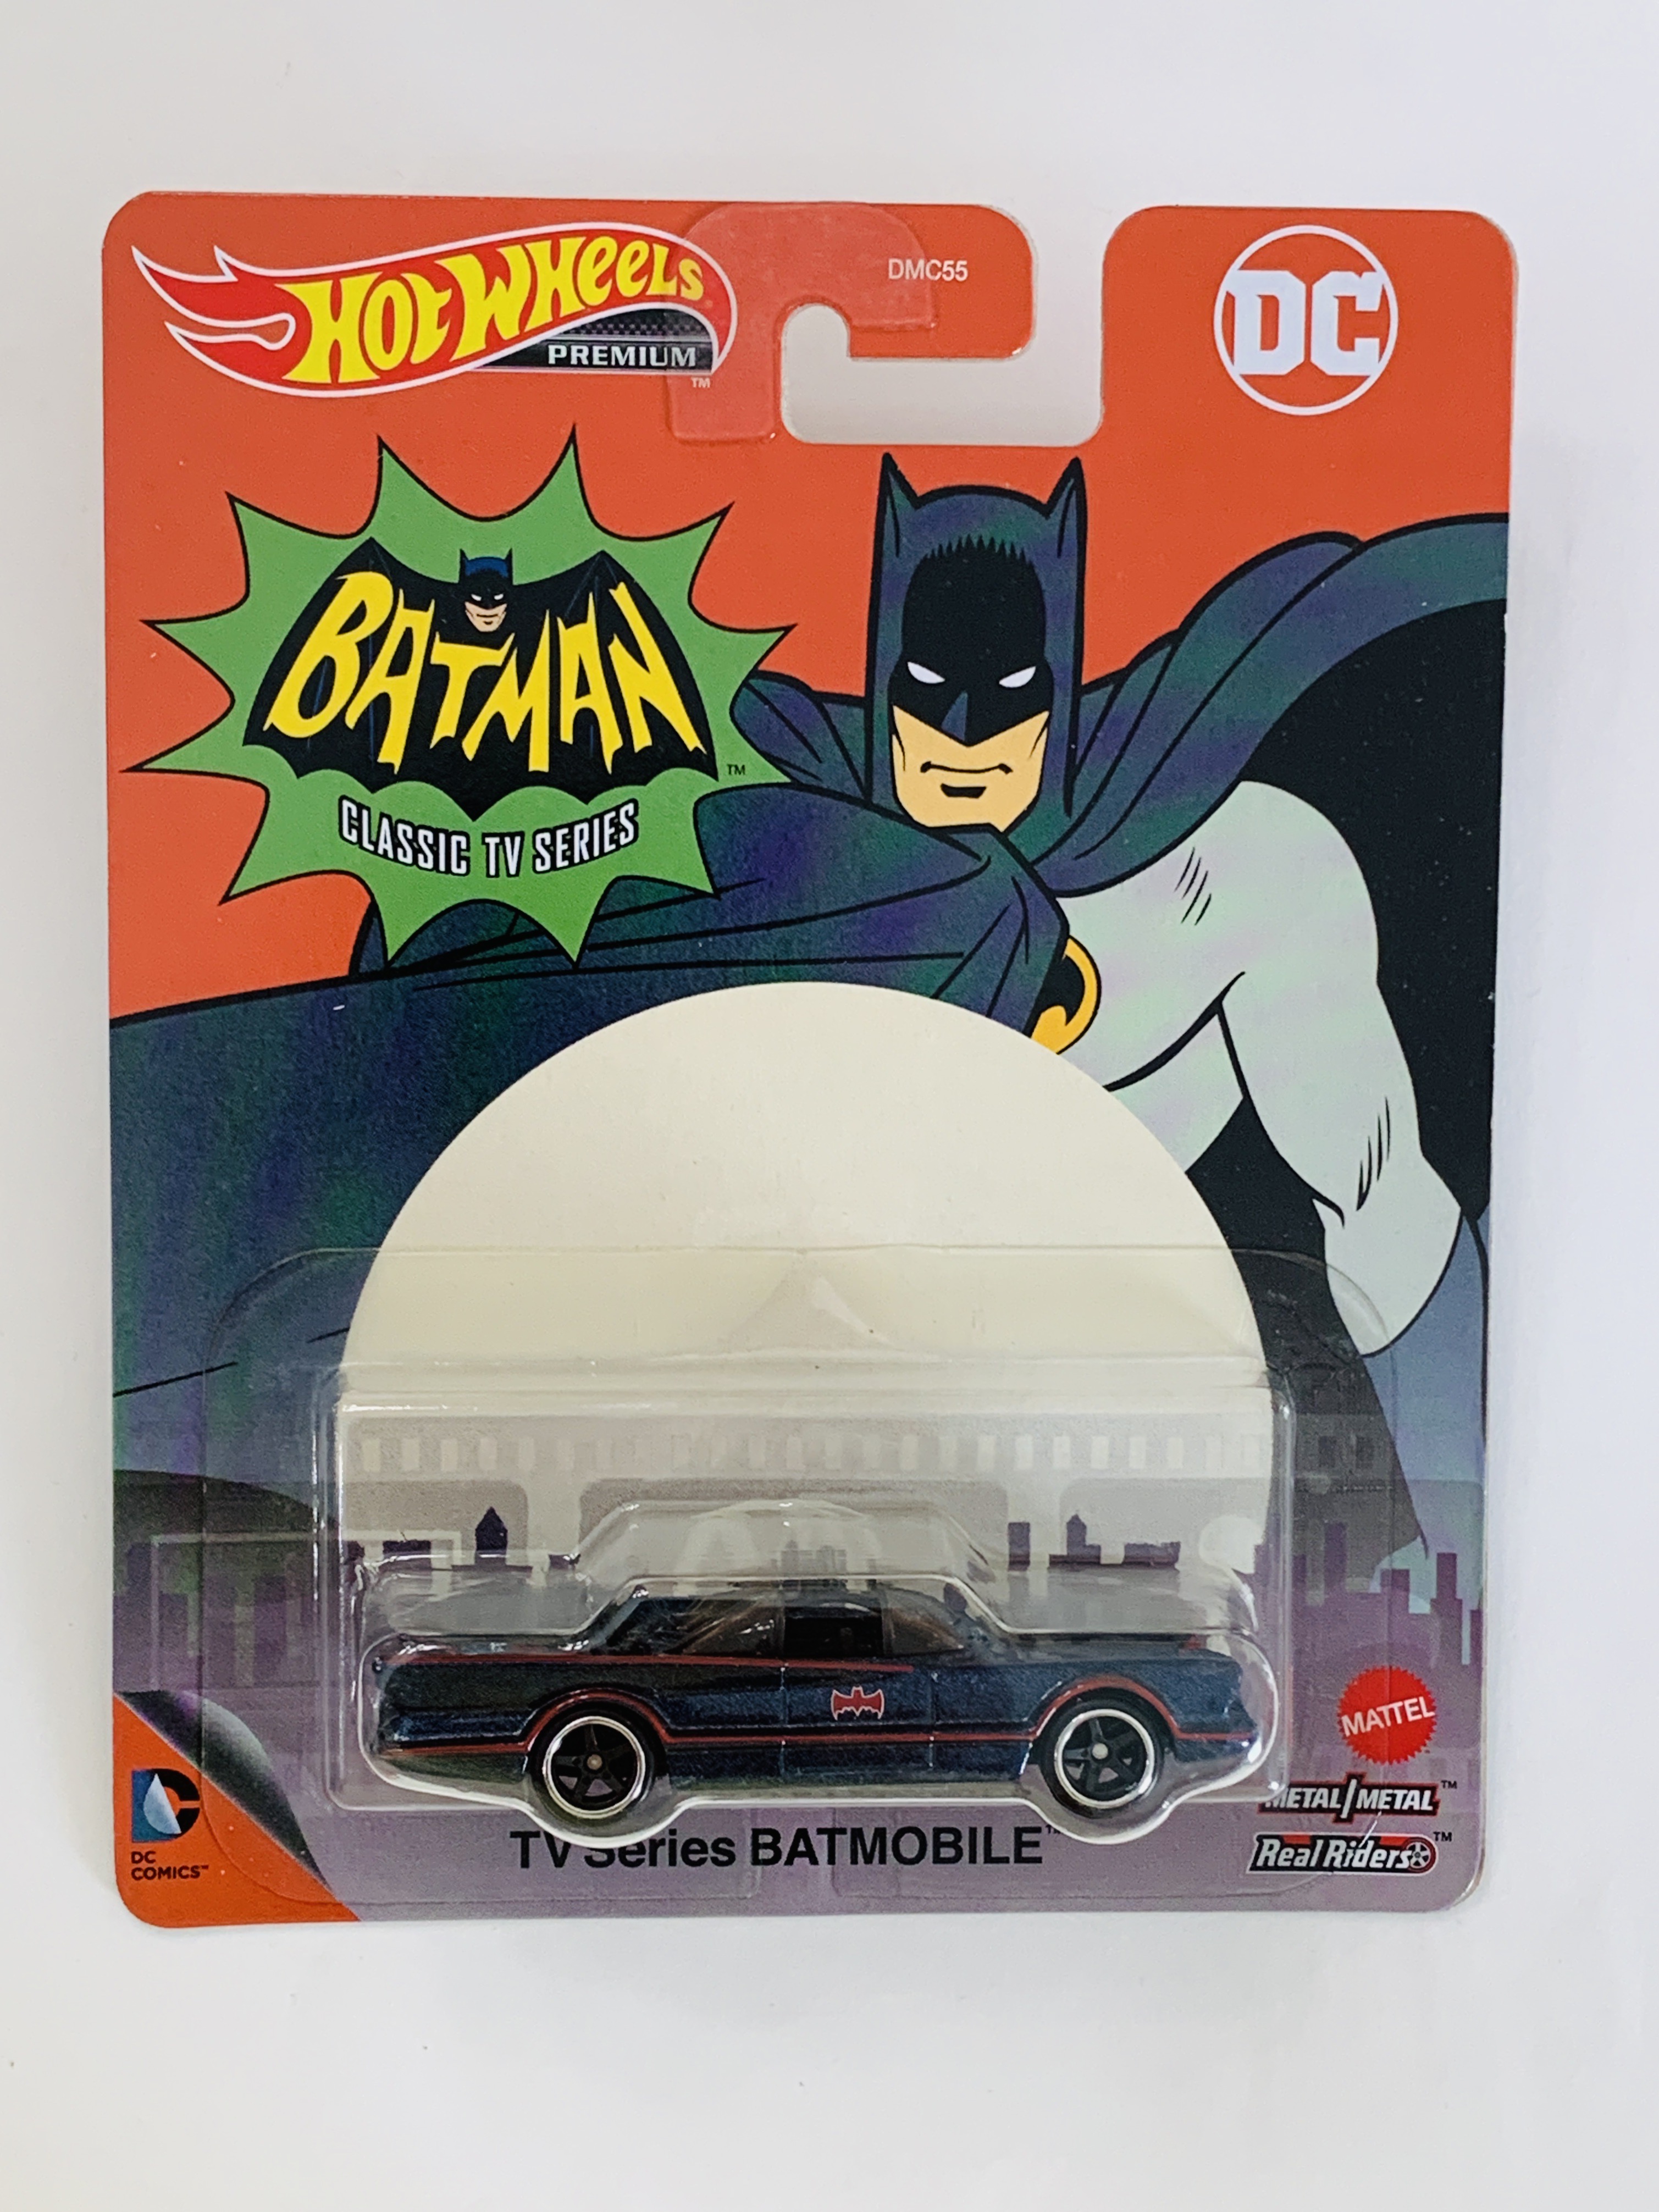 Hot Wheels Premium DC Comics Batman TV Series Batmobile